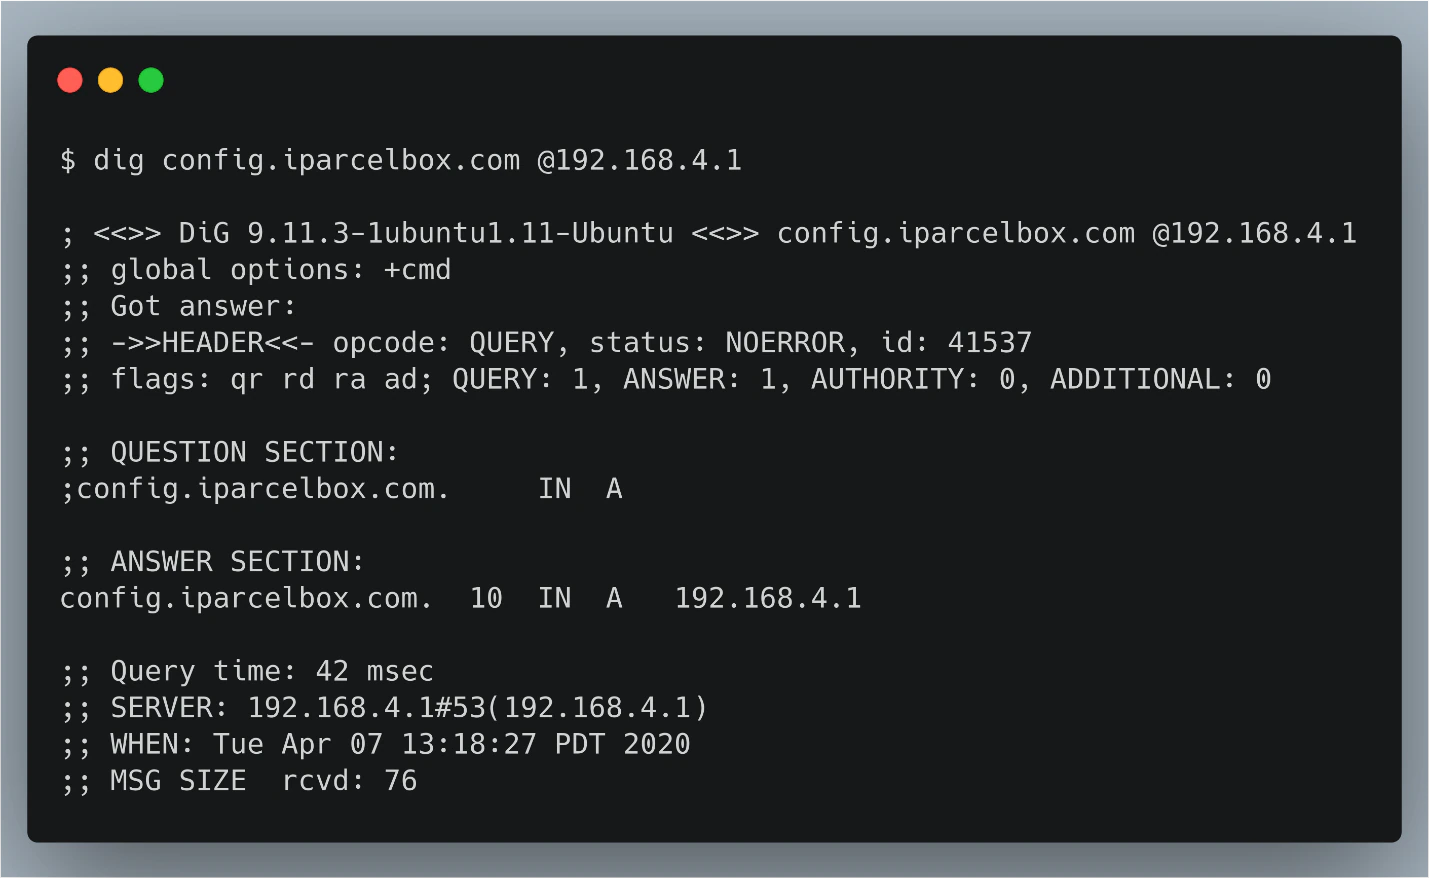 Figure 7. DNS Lookup of config.iparcelbox.com